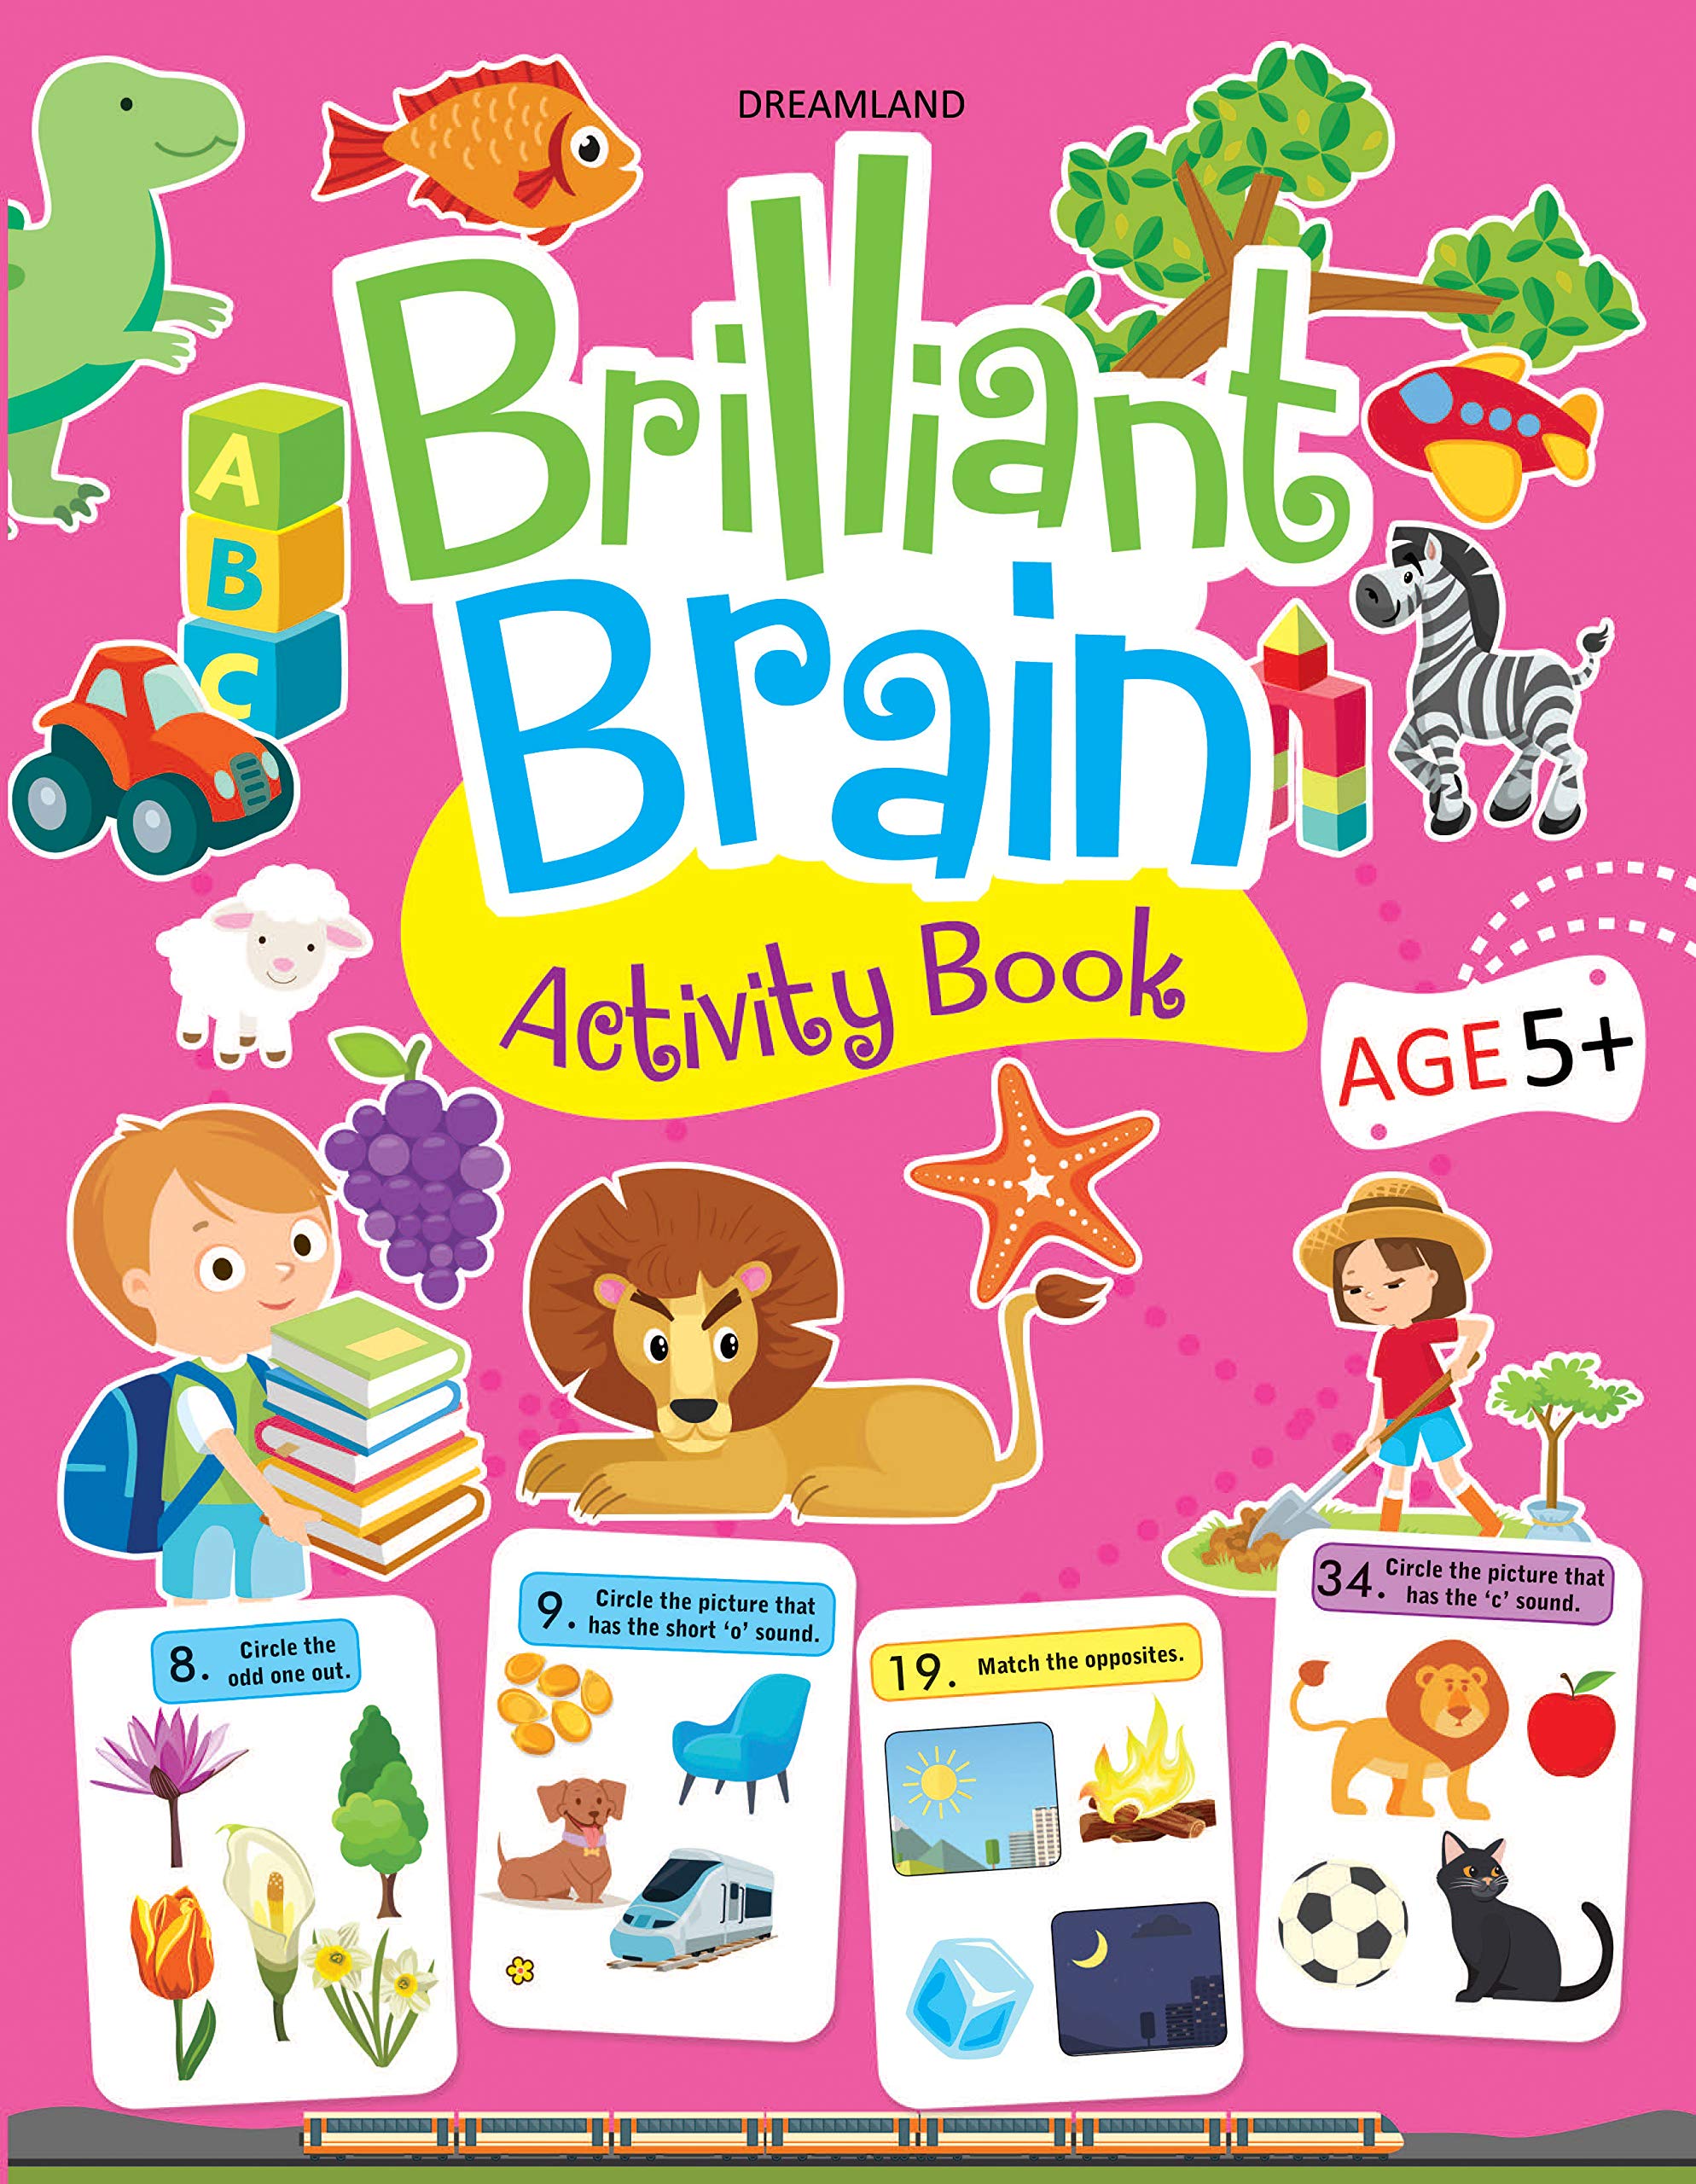 Brilliant Brain Activity Book 5+